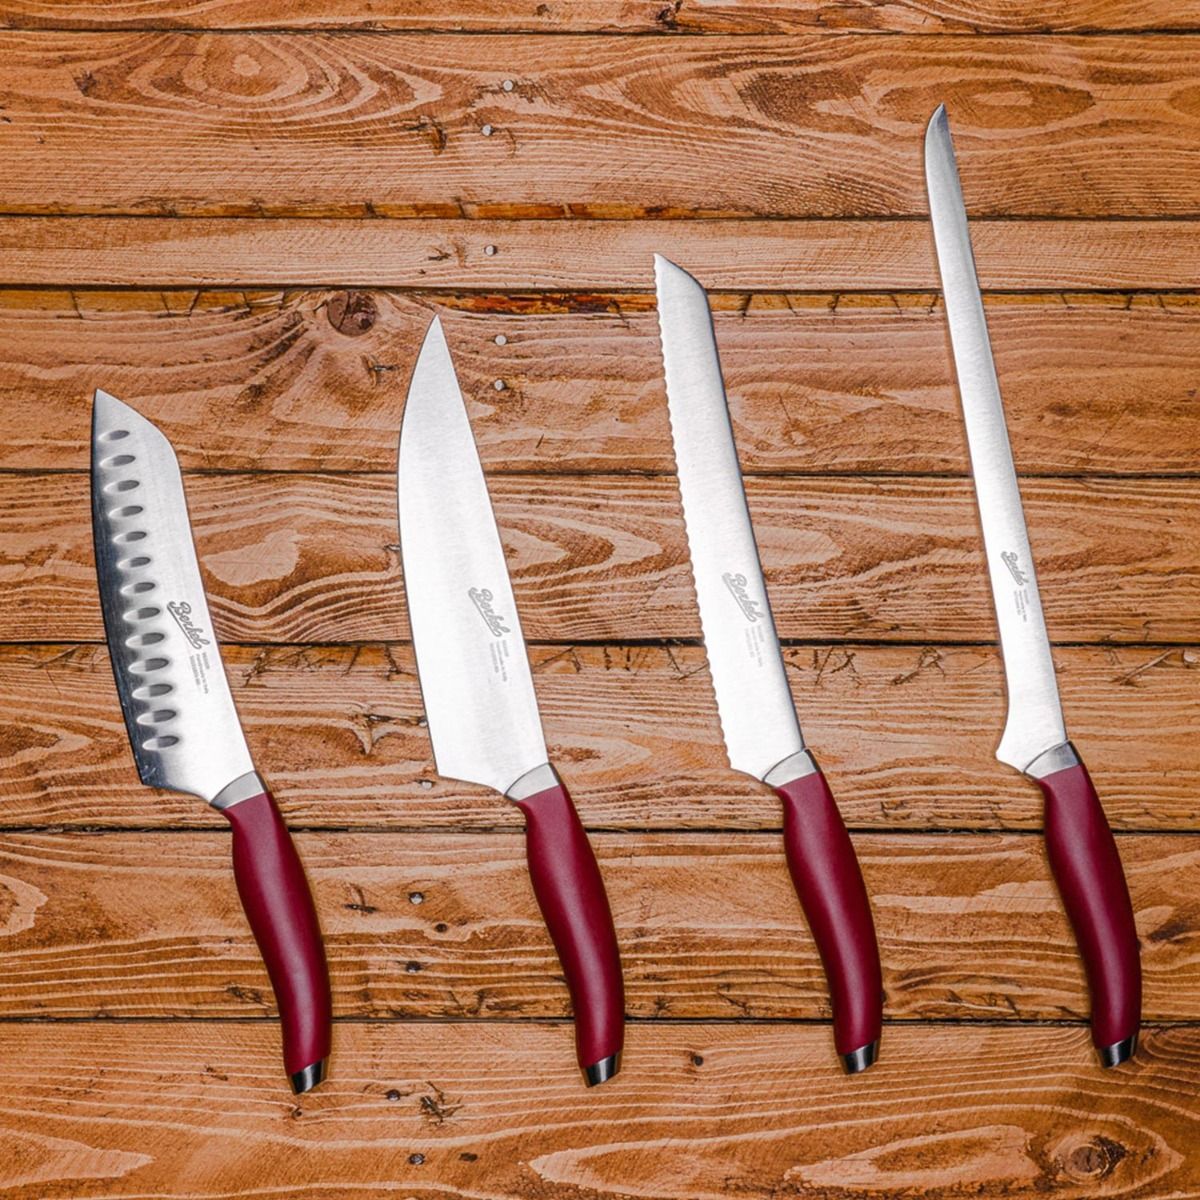 Berkel Teknica set of 4 Red Chef's knives